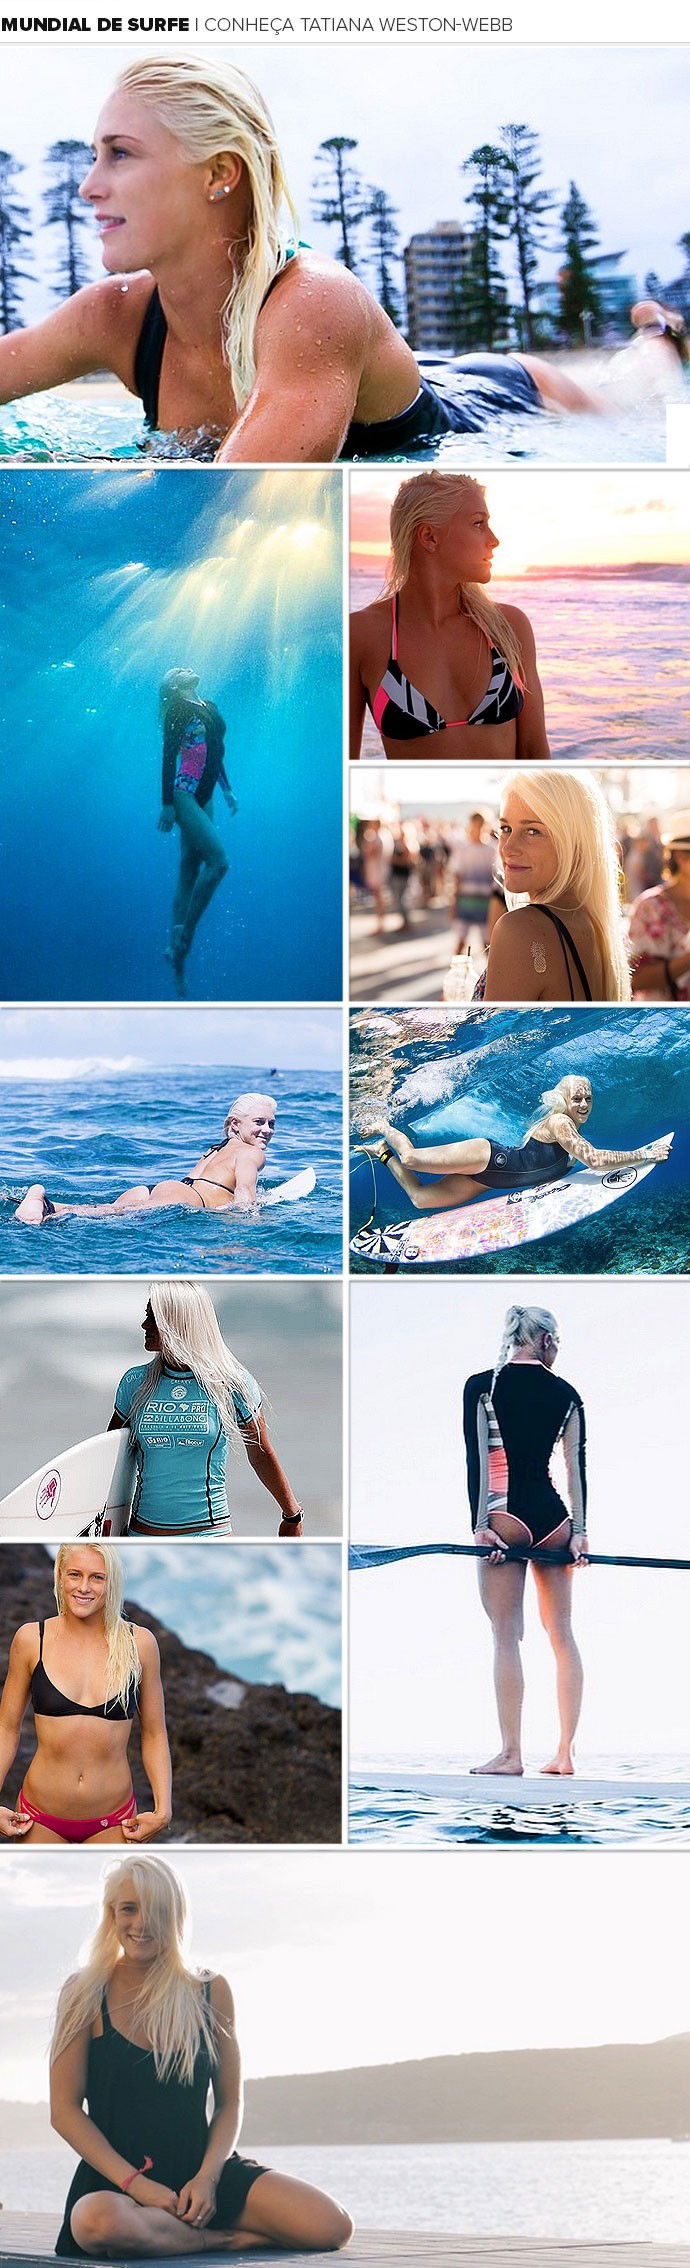 Mosaico - MUNDIAL DE SURFE | Conheça Tatiana Weston-Webb (Foto: Editoria de Arte)